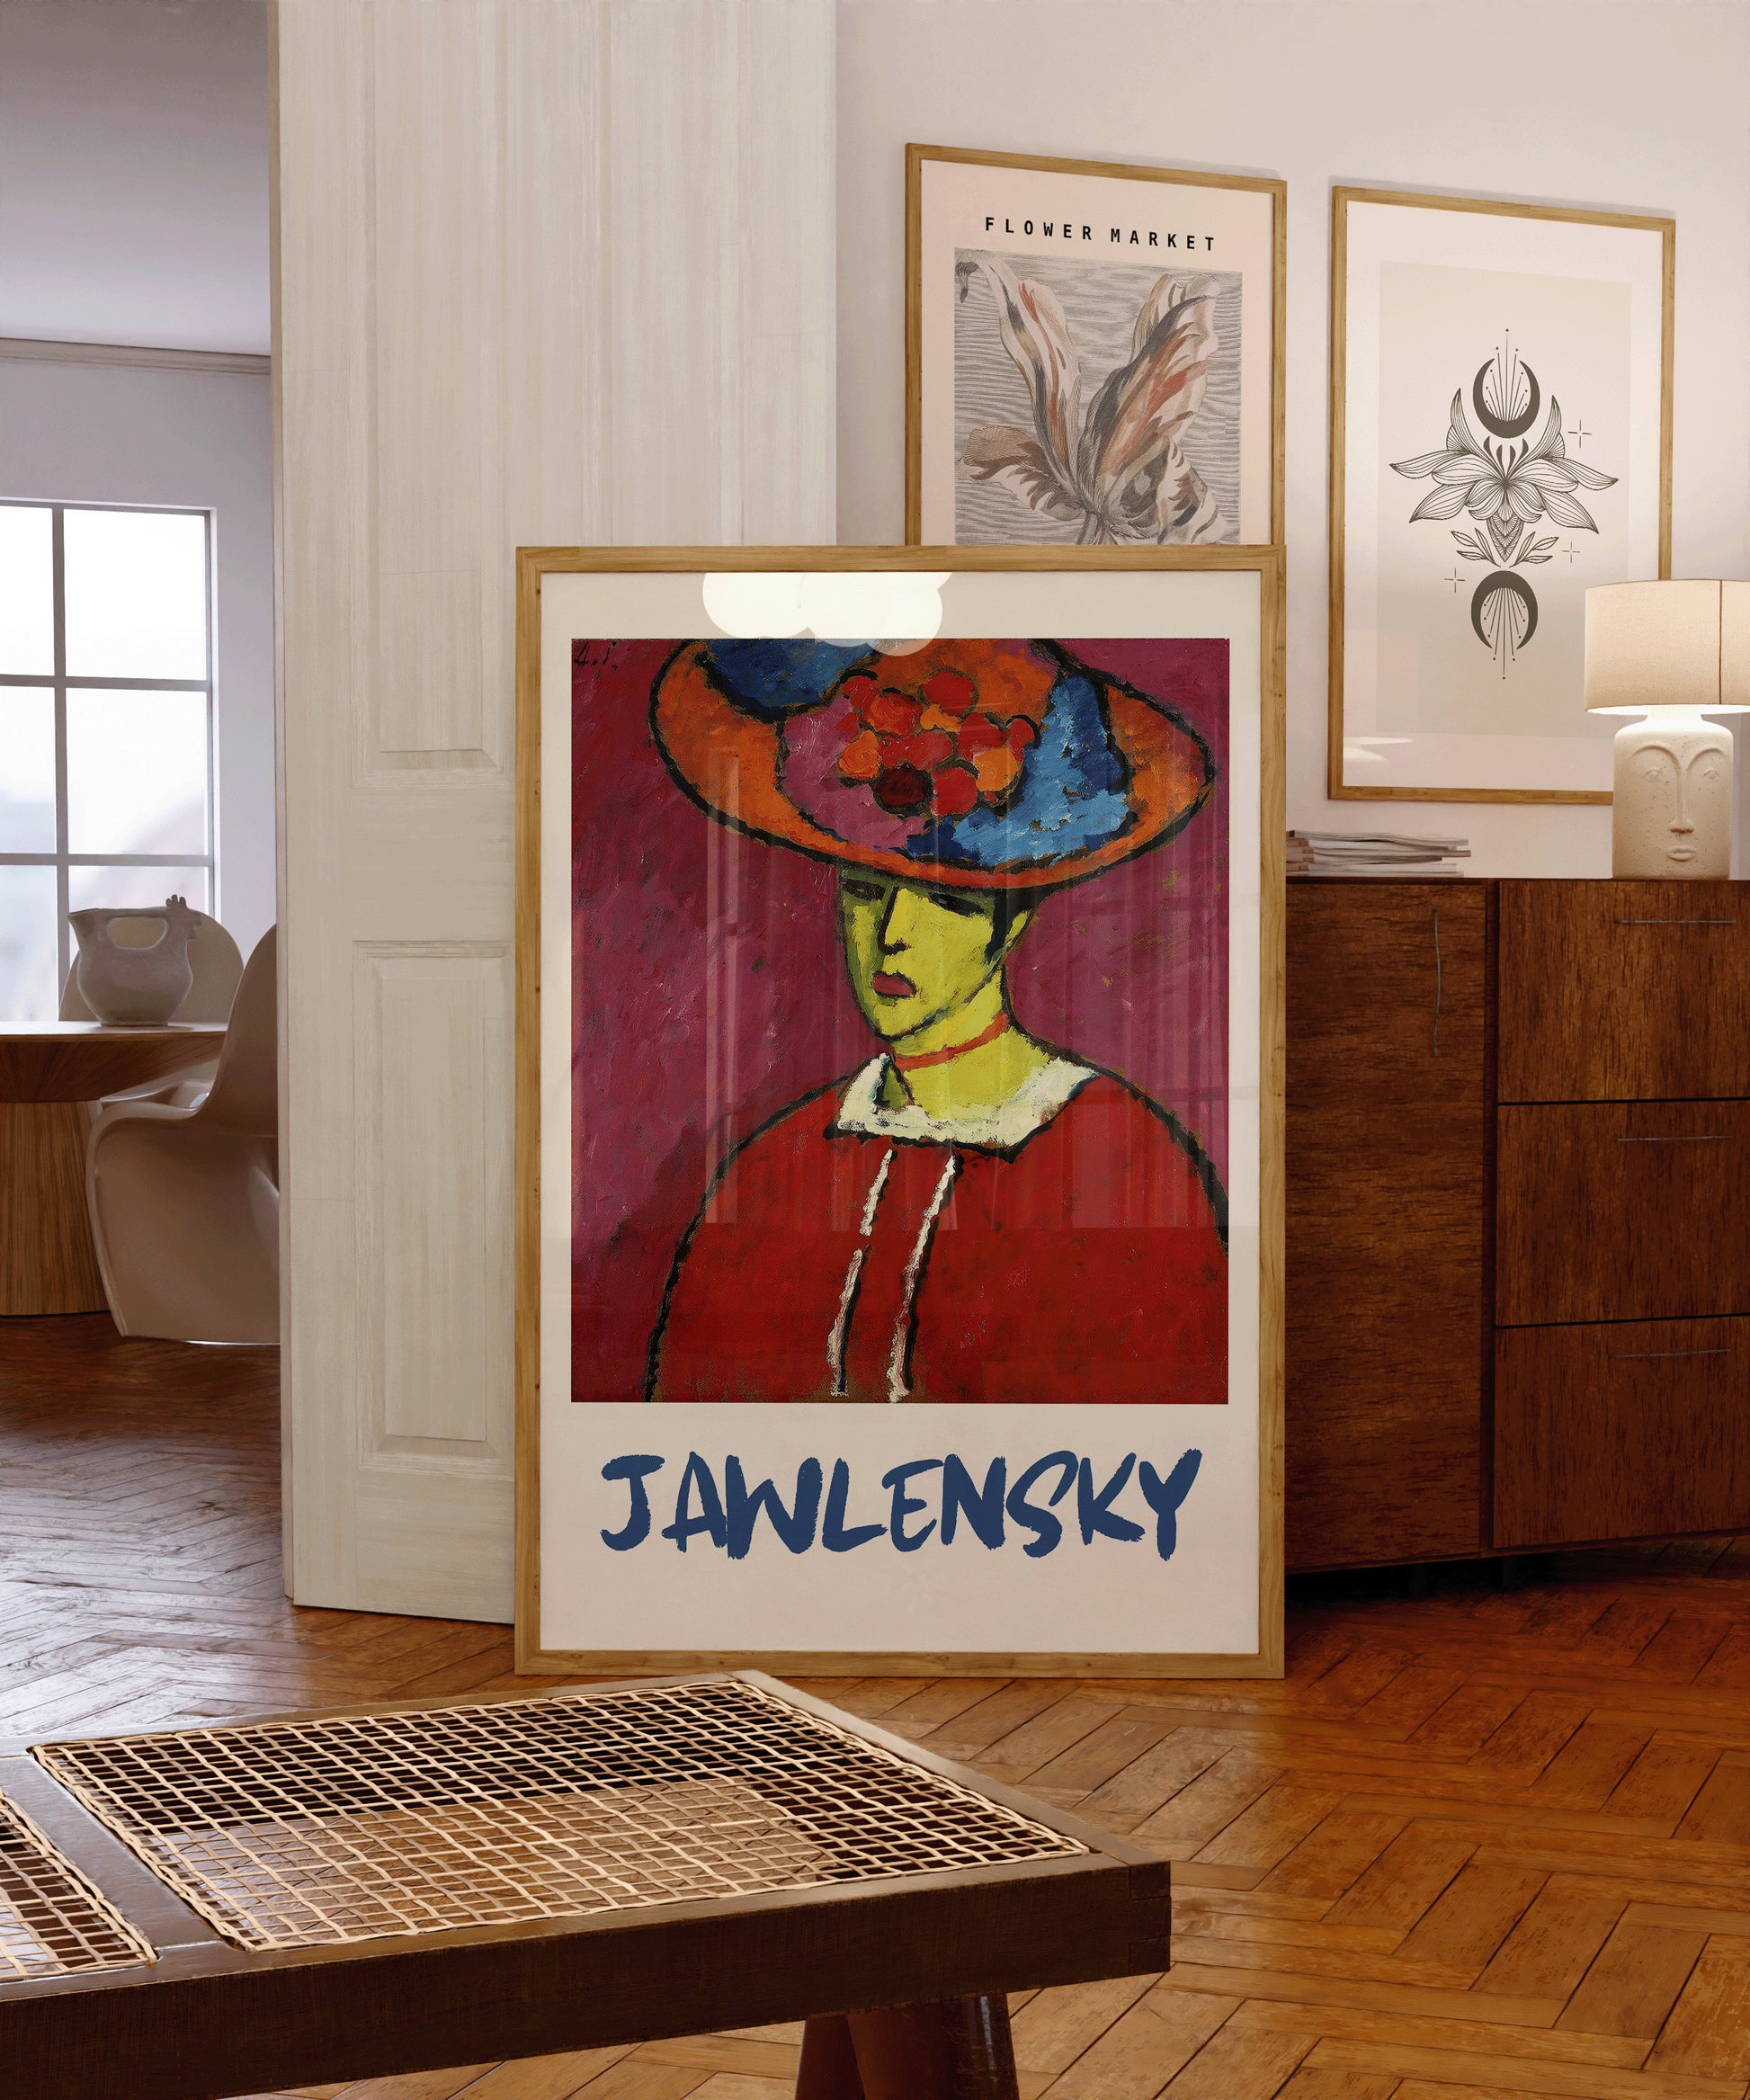 Alexej Von Jawlensky - Schokko in Wide-brimmed Hat | Modernist Art (available framed or unframed)